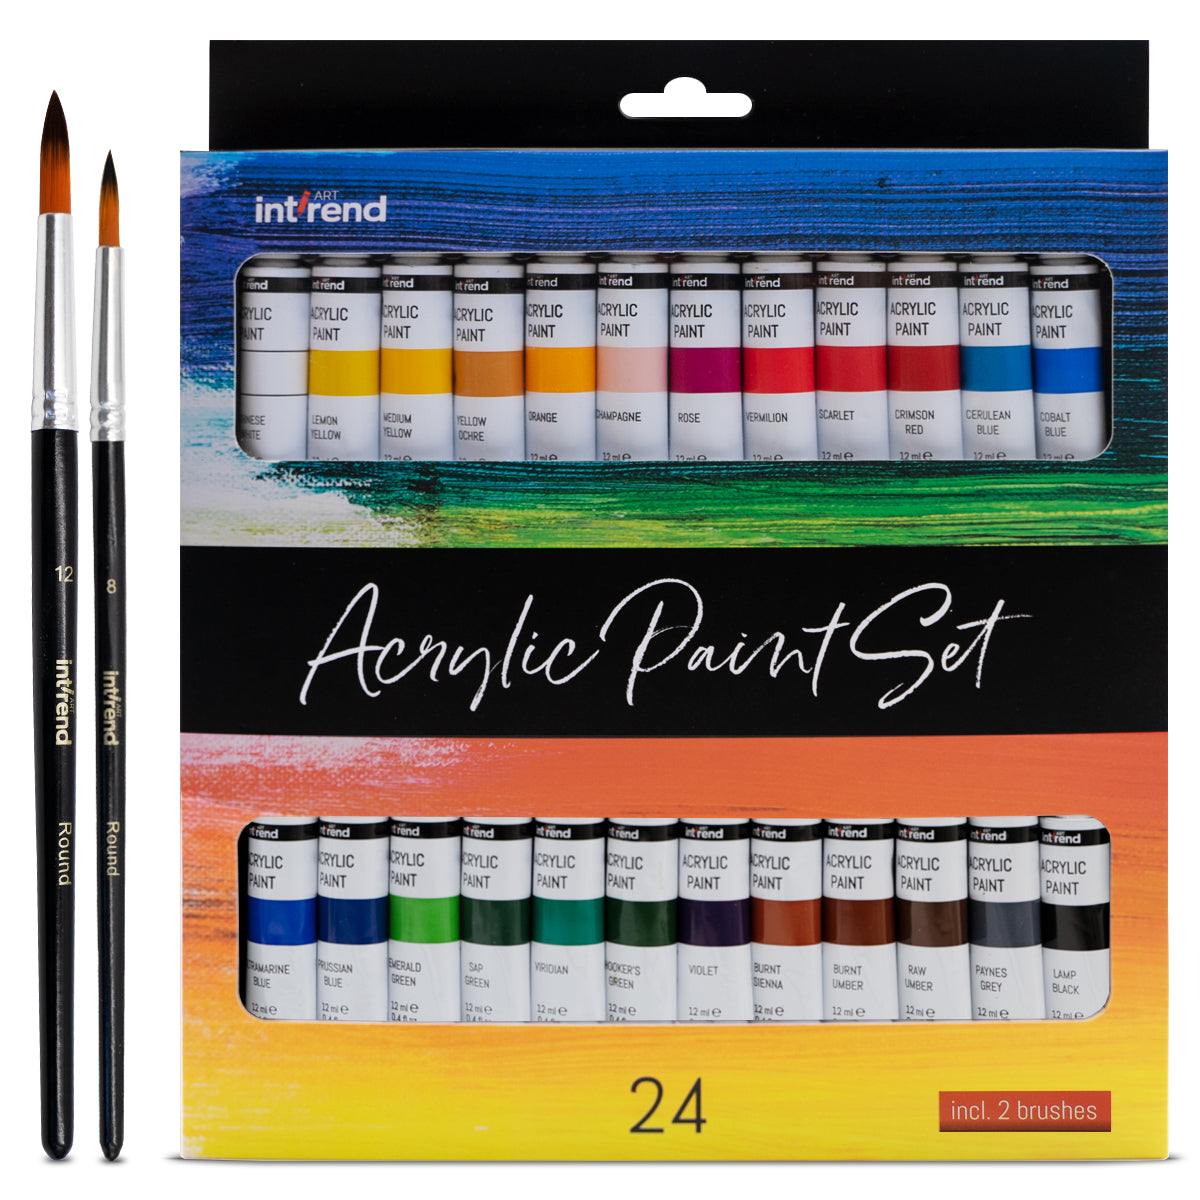 int!rend Acrylfarben Set - 24x Farben je 12 ml + 2 Pinsel - Acryl Farbe für Holz , Leinwand , Ton , Steine & Gips - Acrylfarbe für Modellbau und zum B